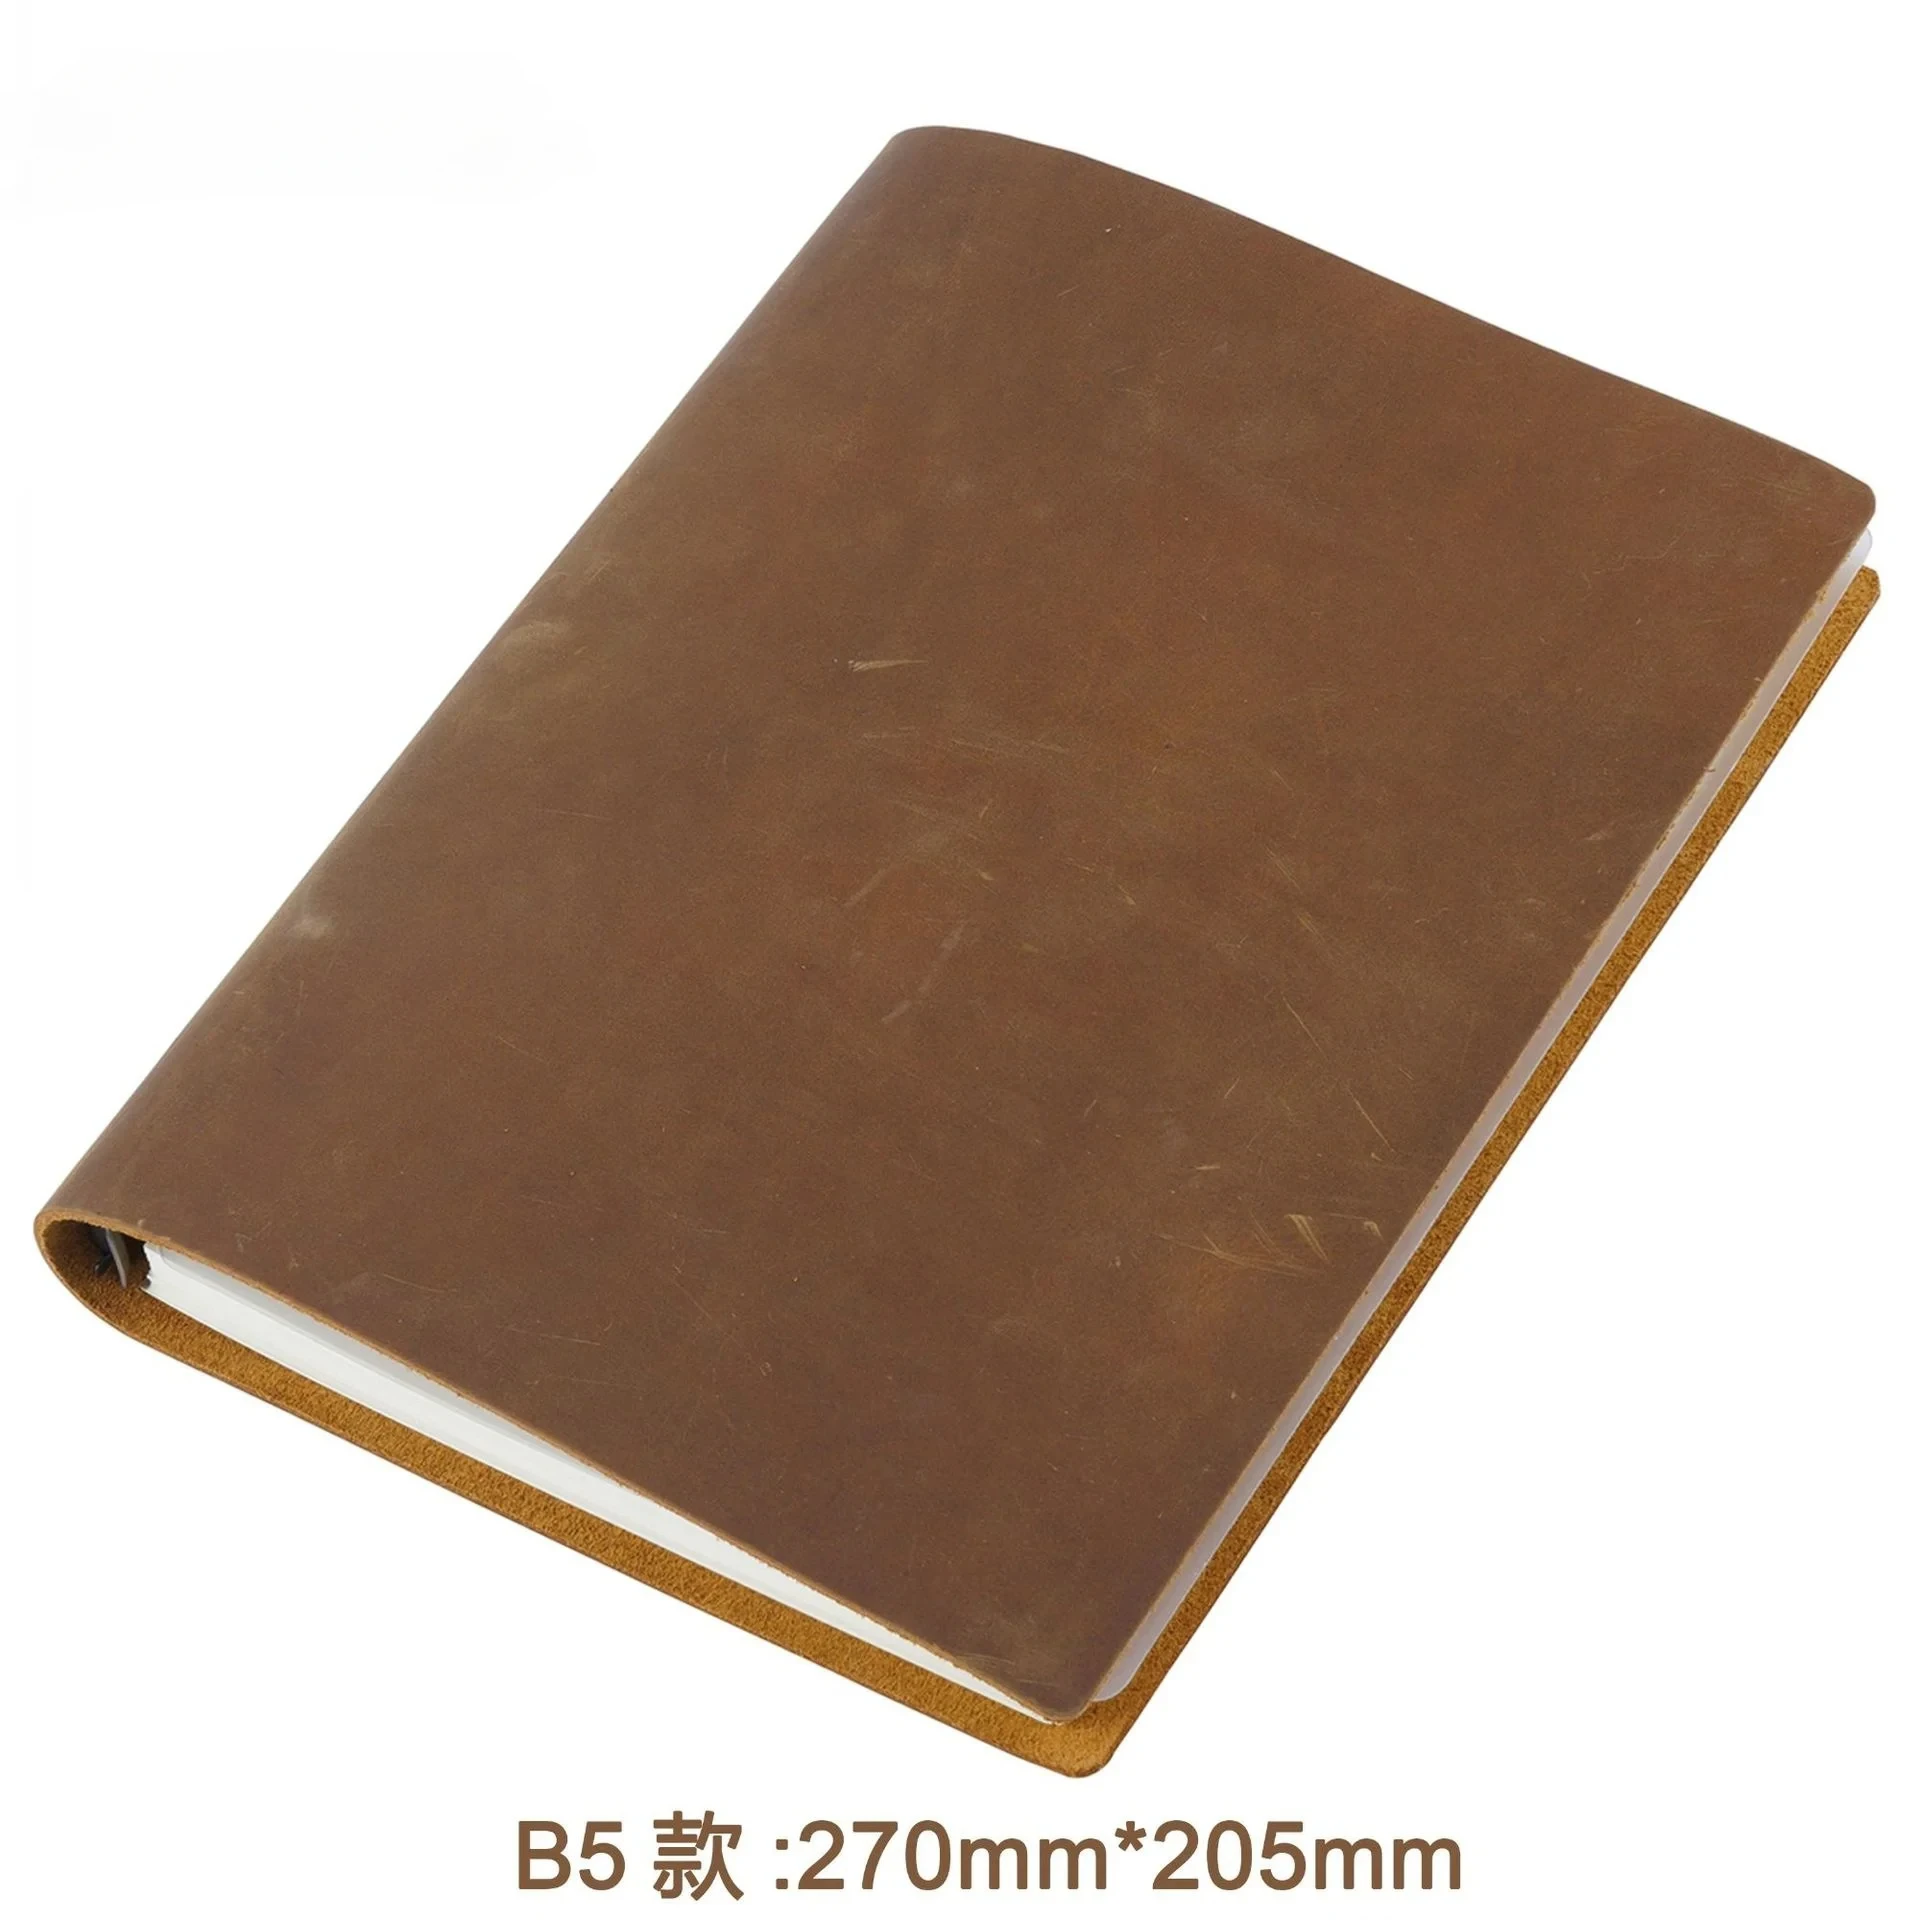 genuine-leather-b5-size-rings-planner-with-9-hole-binder-sketchbook-big-notepad-vintage-notebook-journal-organizadores-agenda